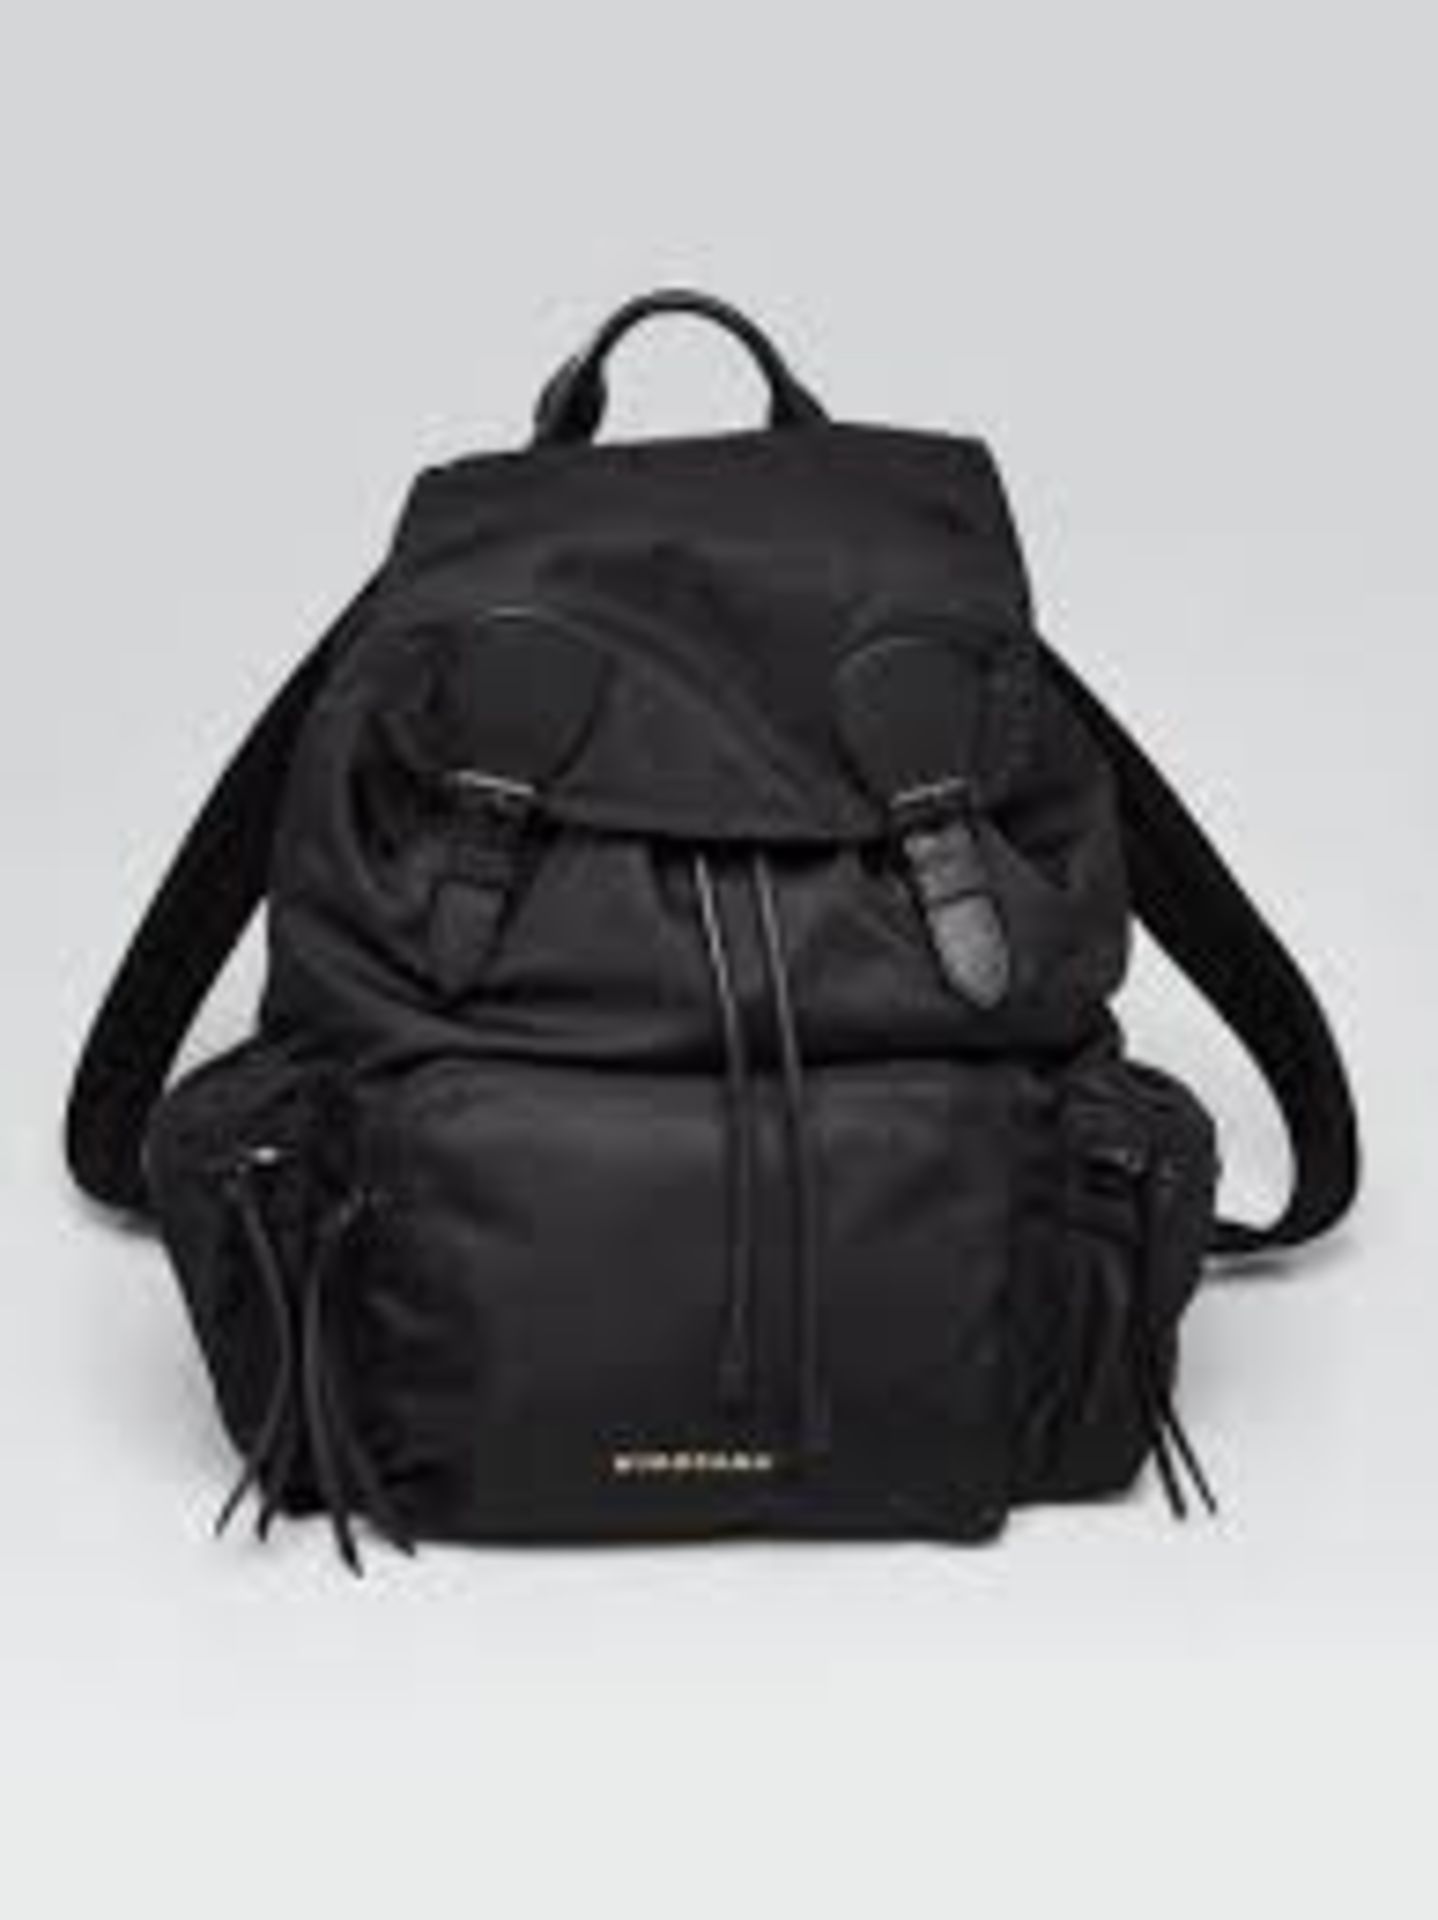 BURBERRY black nylon backpack. Personalised EB. 35x35cm - Image 2 of 12